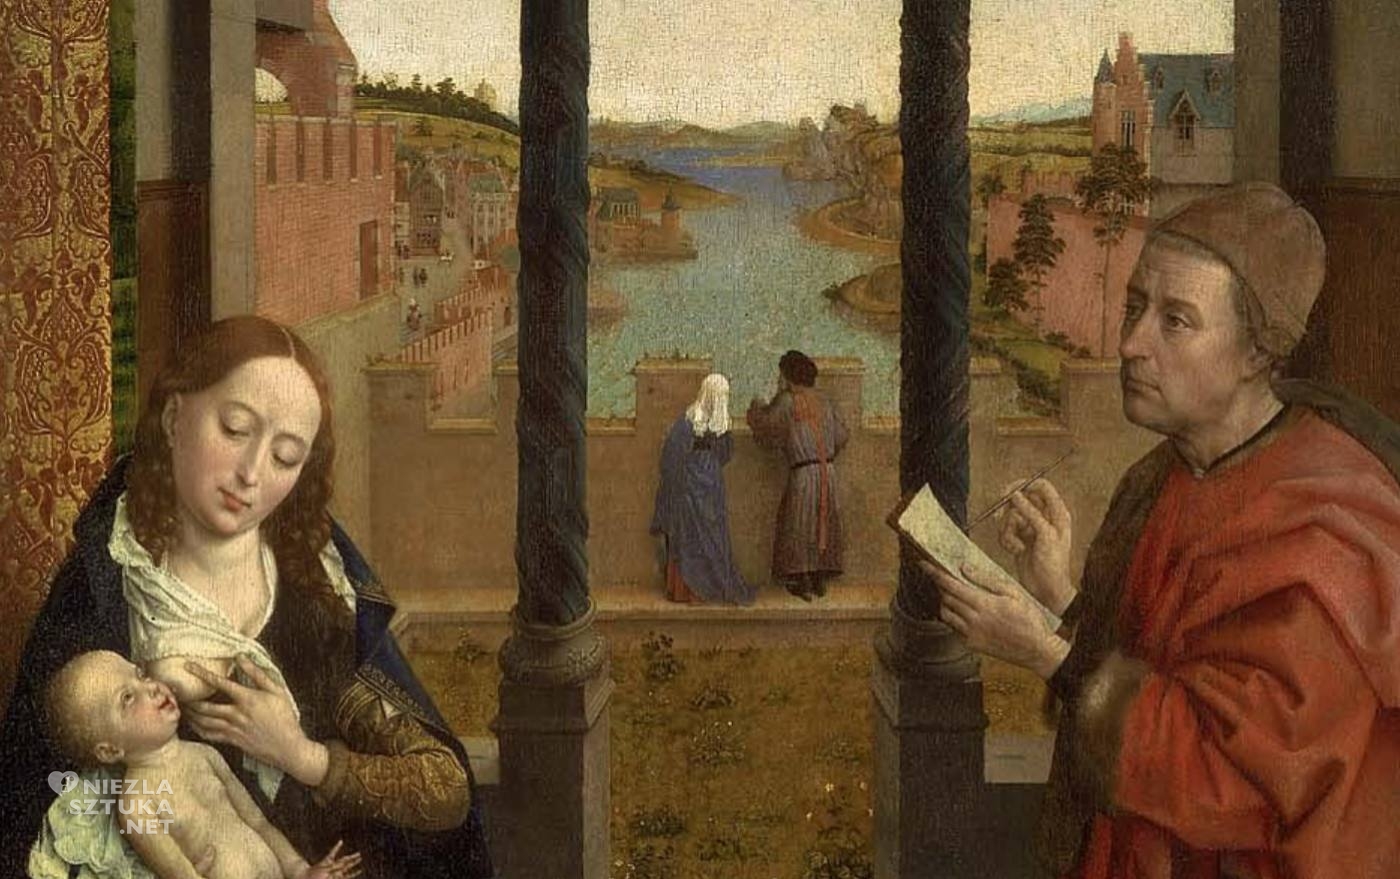 Rogier van der Weyden, Św. Łukasz malujący Madonnę, renesans, malarstwo niderlandzkie, Niezła Sztuka